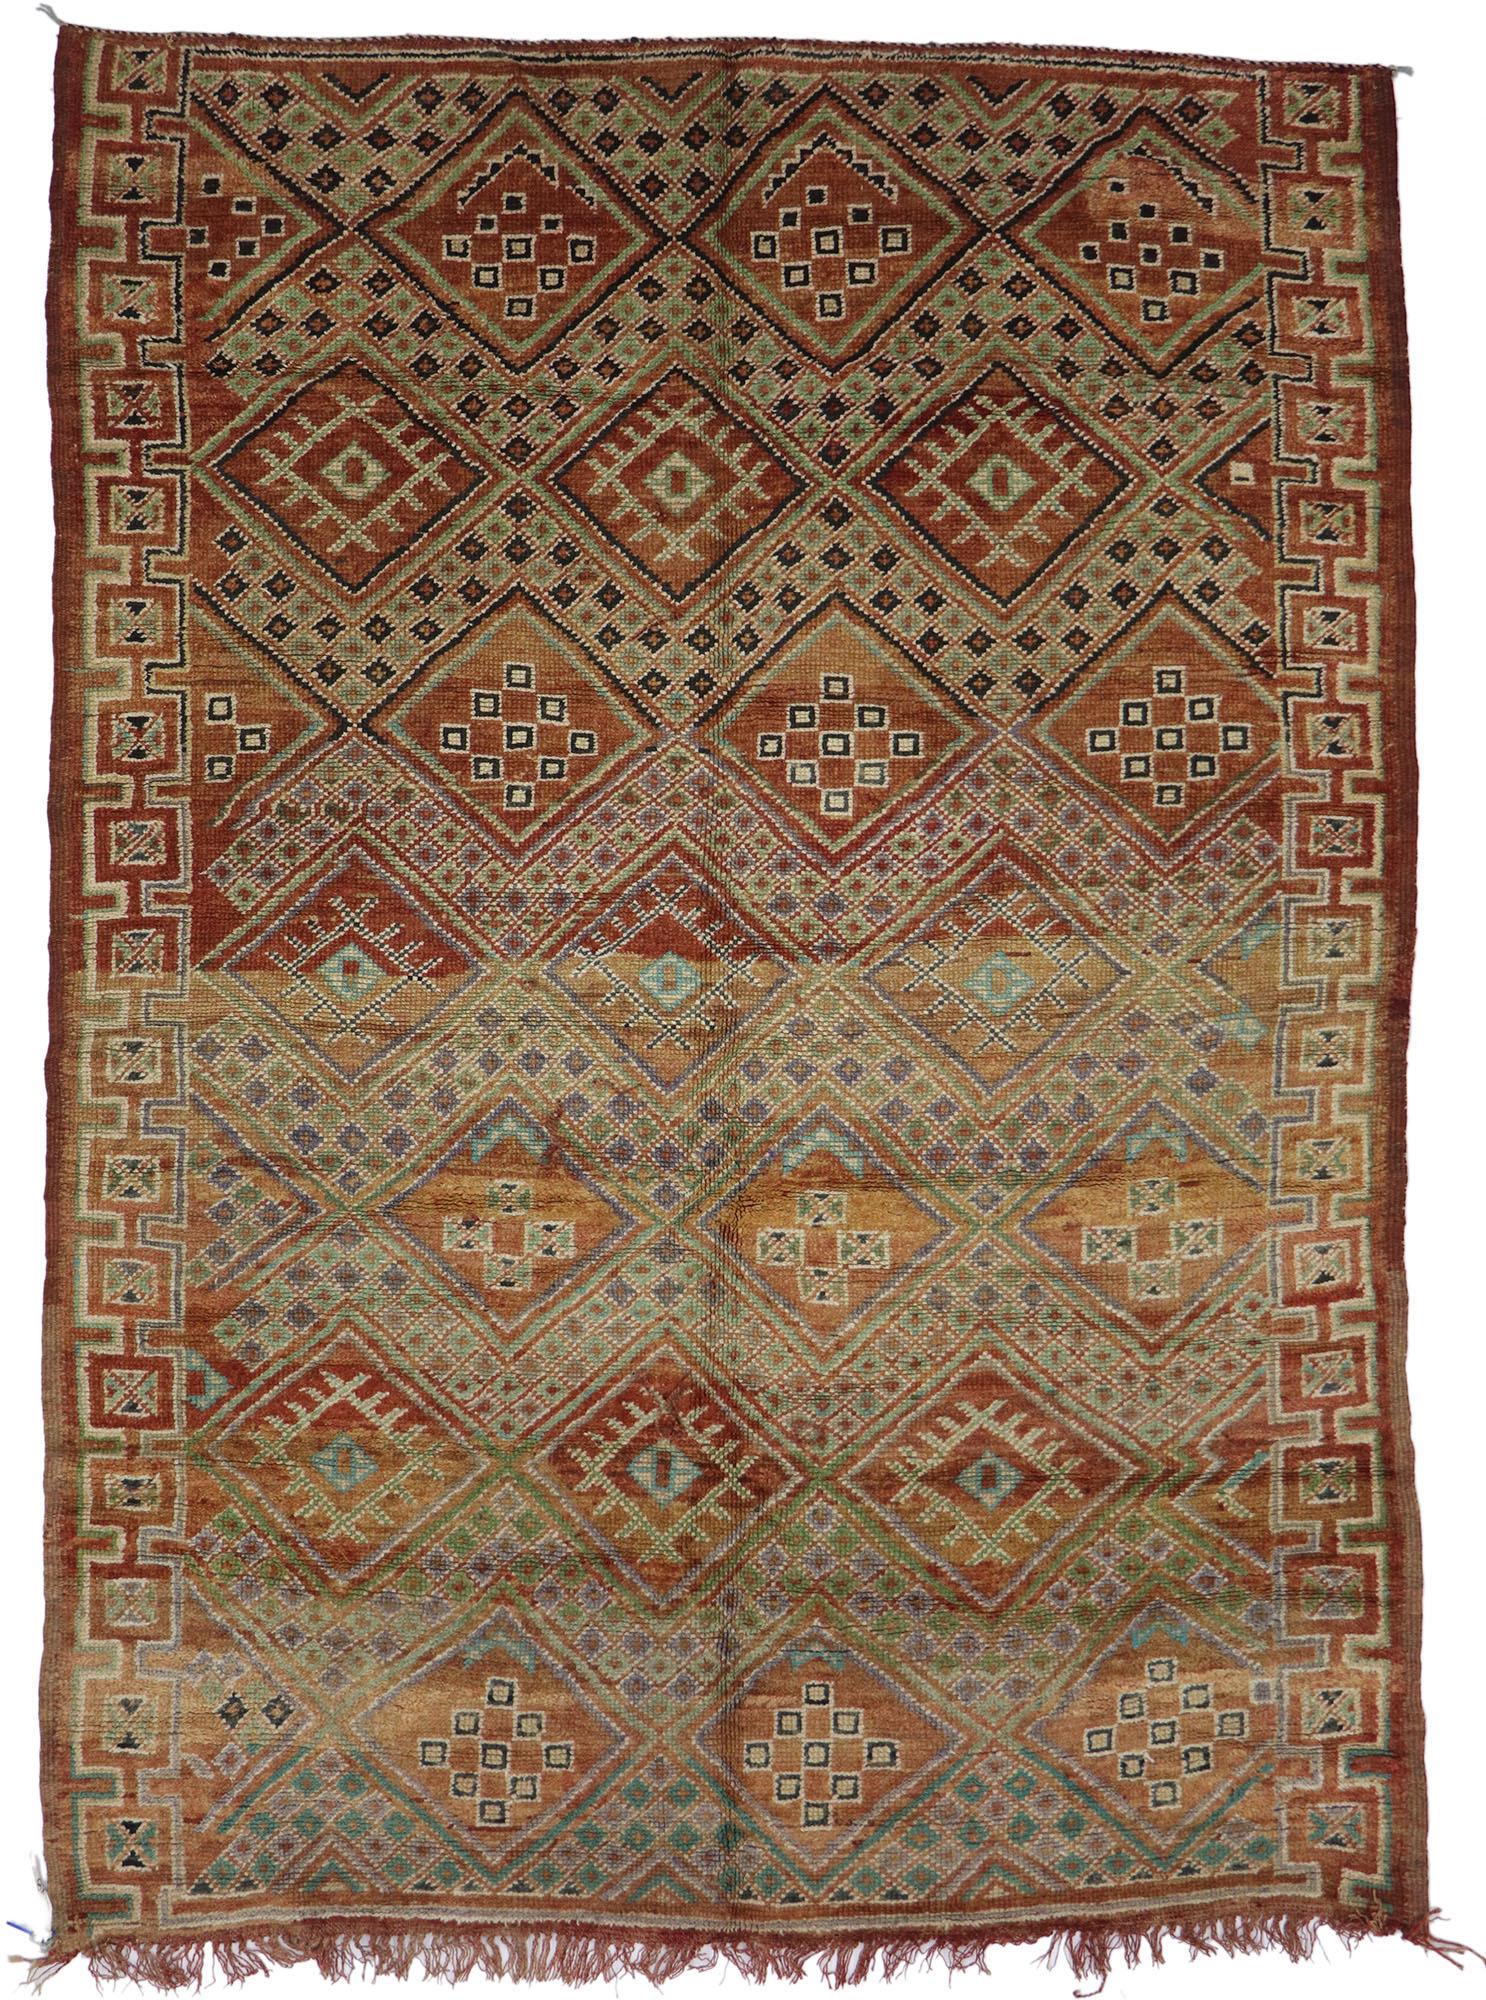 Vintage Beni MGuild Moroccan Rug, Elegant Warmth Meets Nomadic Charm 2